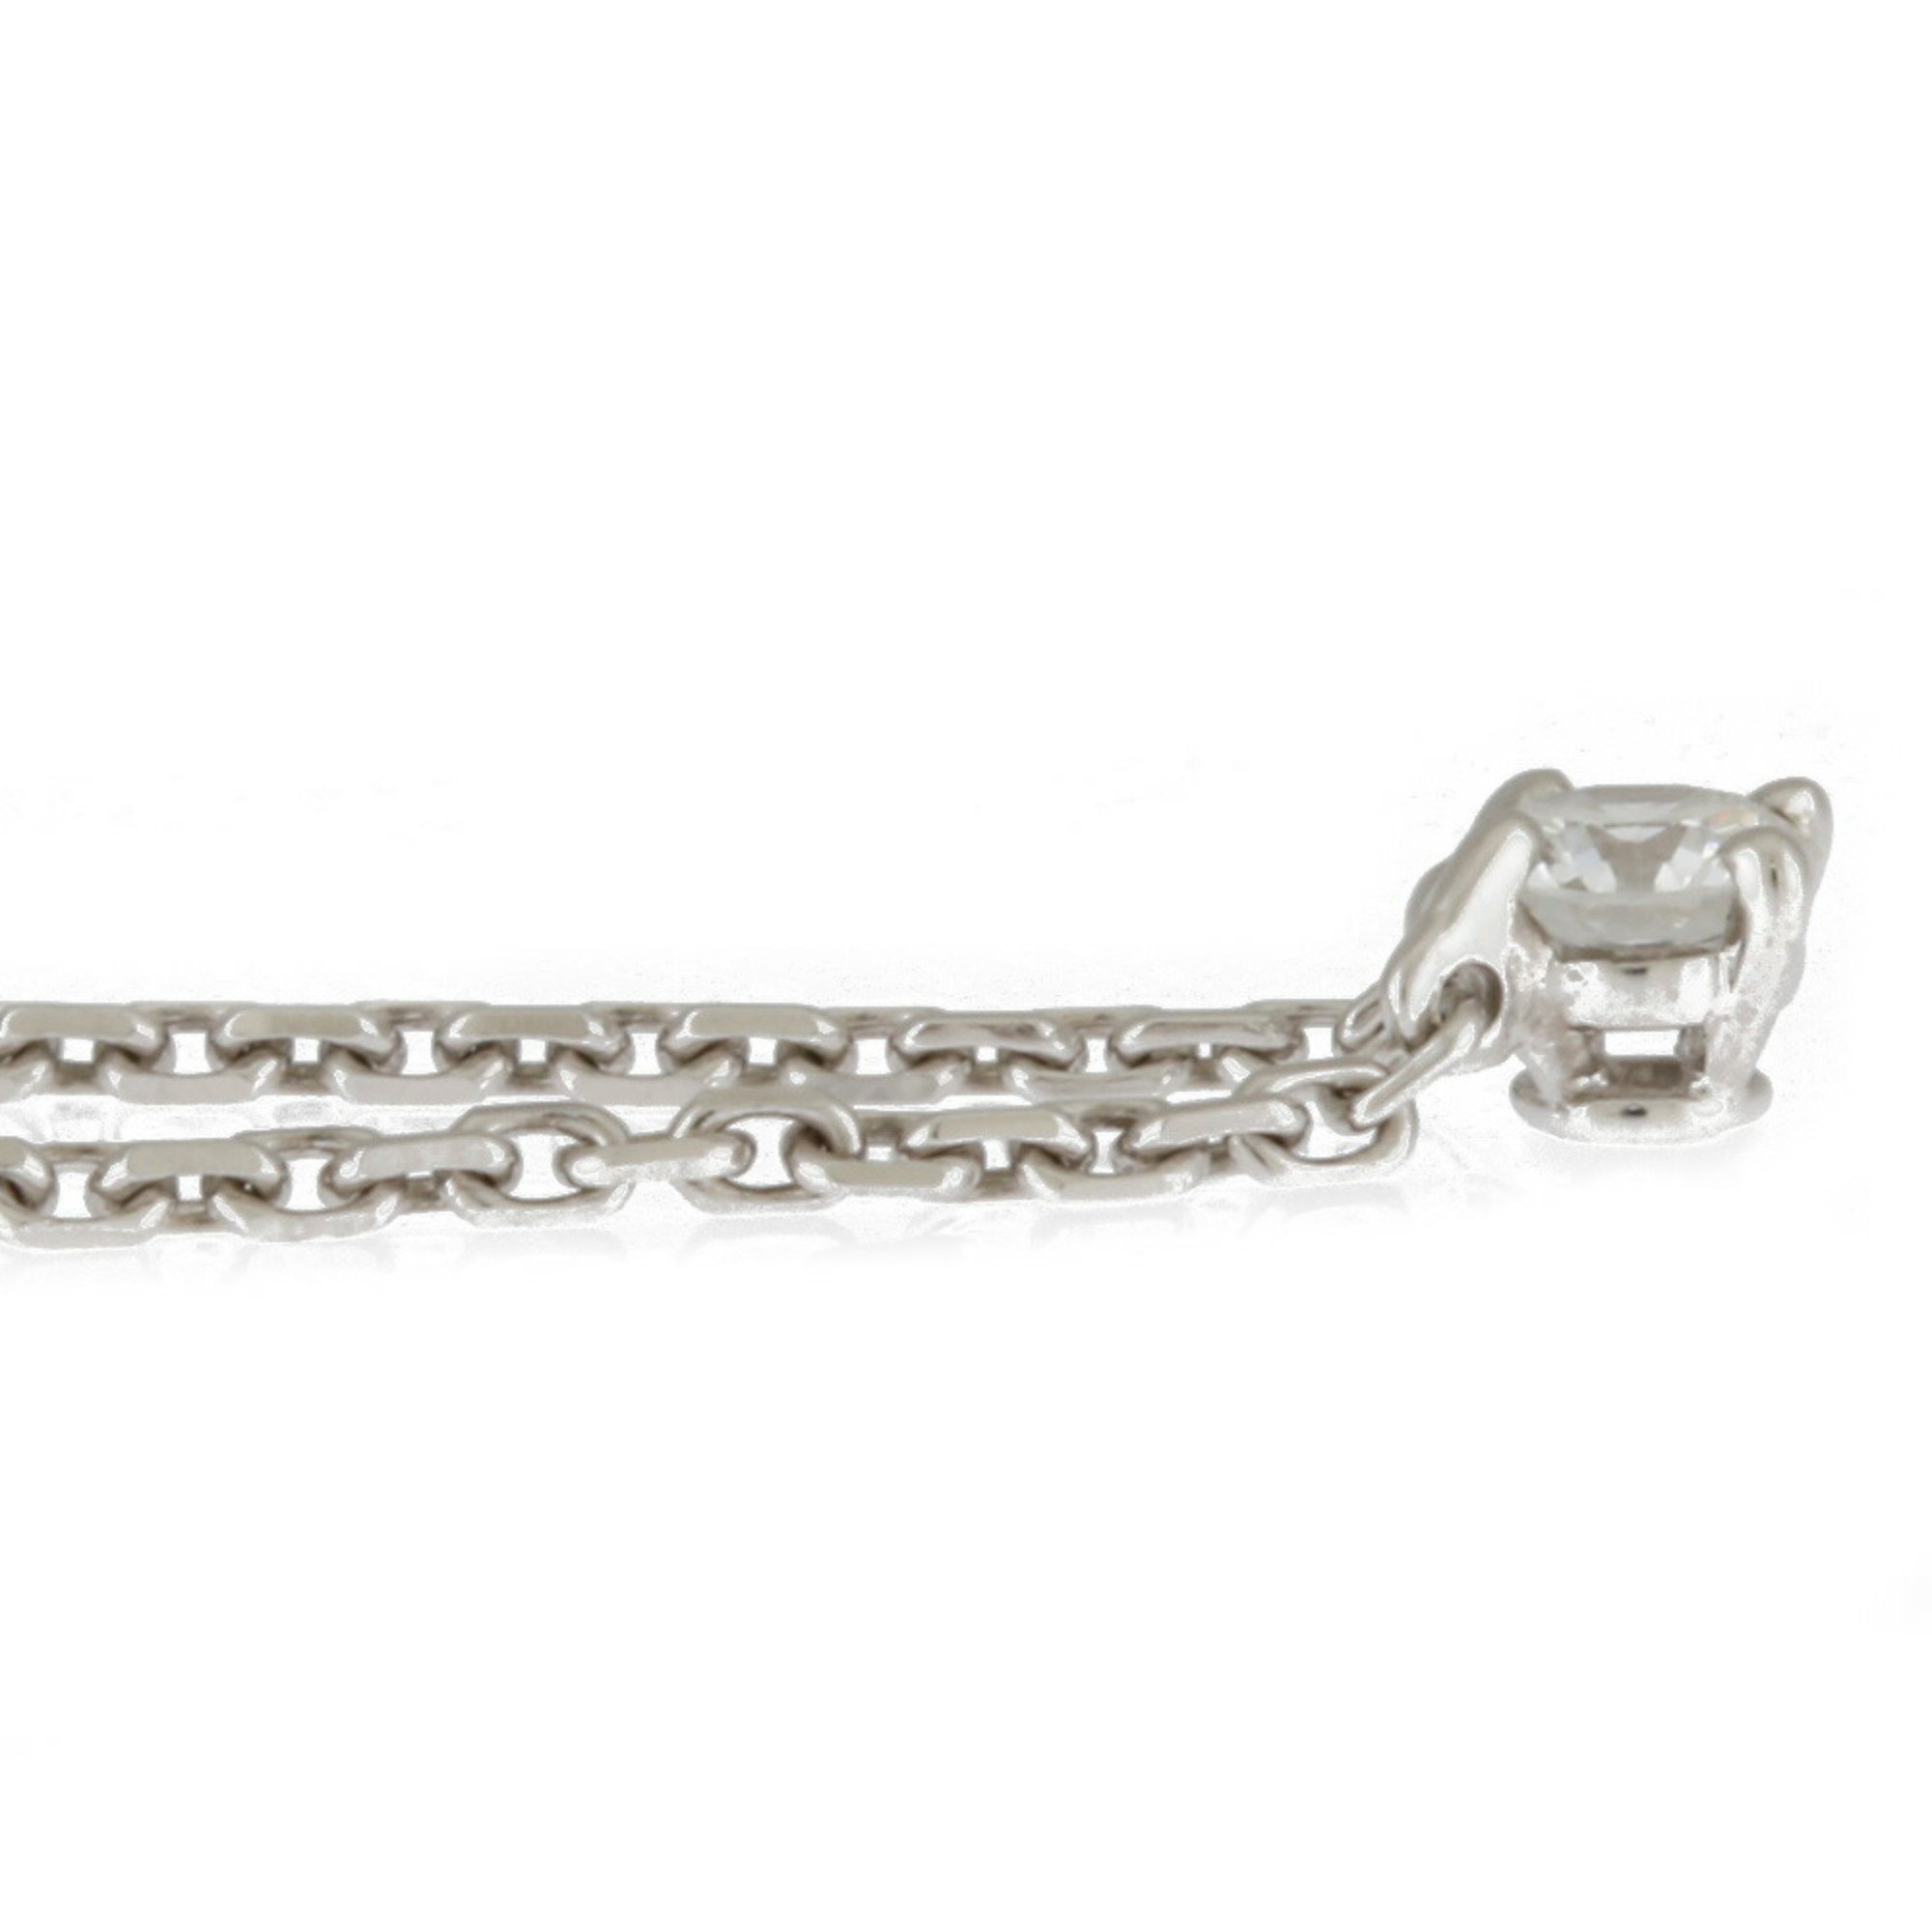 Cartier Love Support Necklace 18k K18 White Gold Diamond Ladies CARTIER